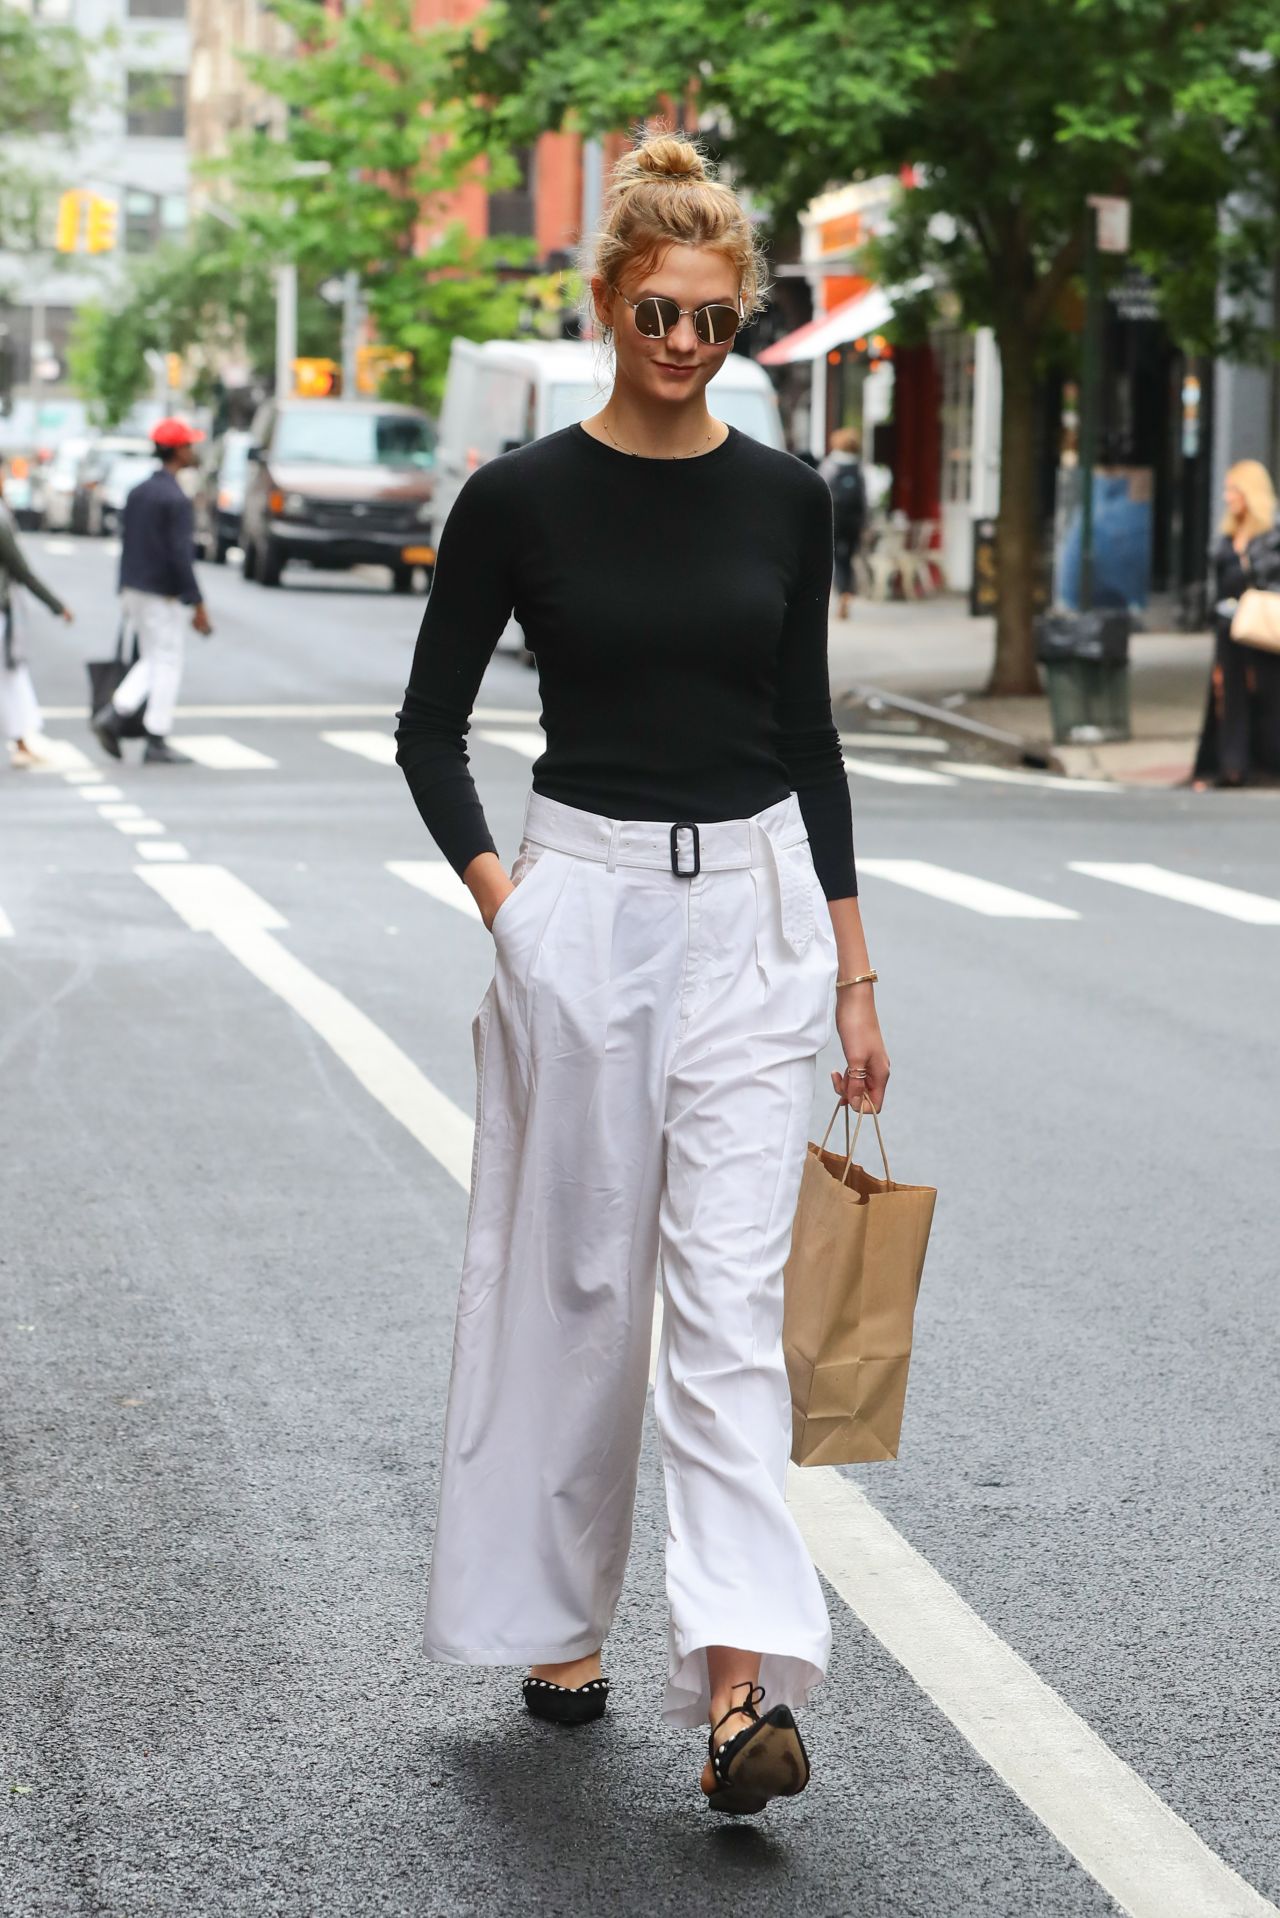 Karlie Kloss in White Pants - NYC 05/30/2017 • CelebMafia